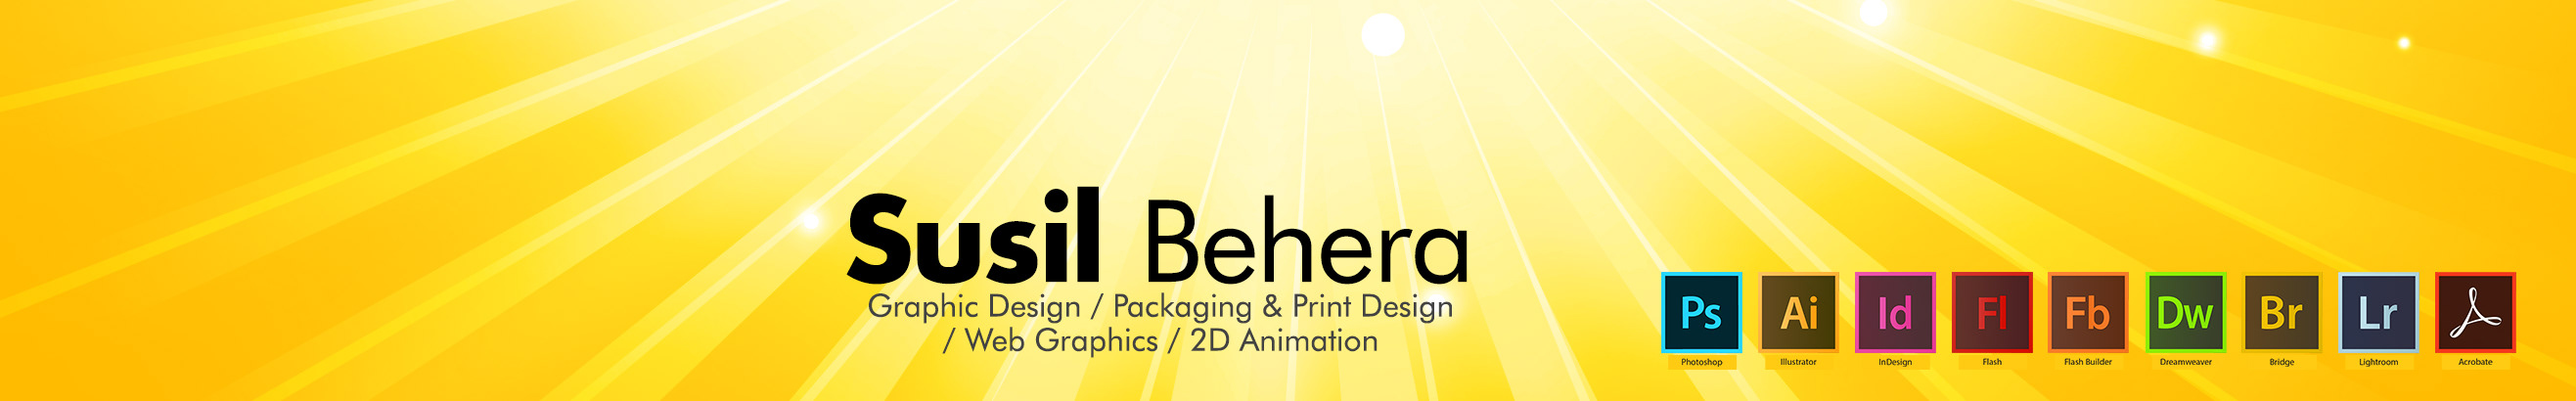 Susil Behera's profile banner